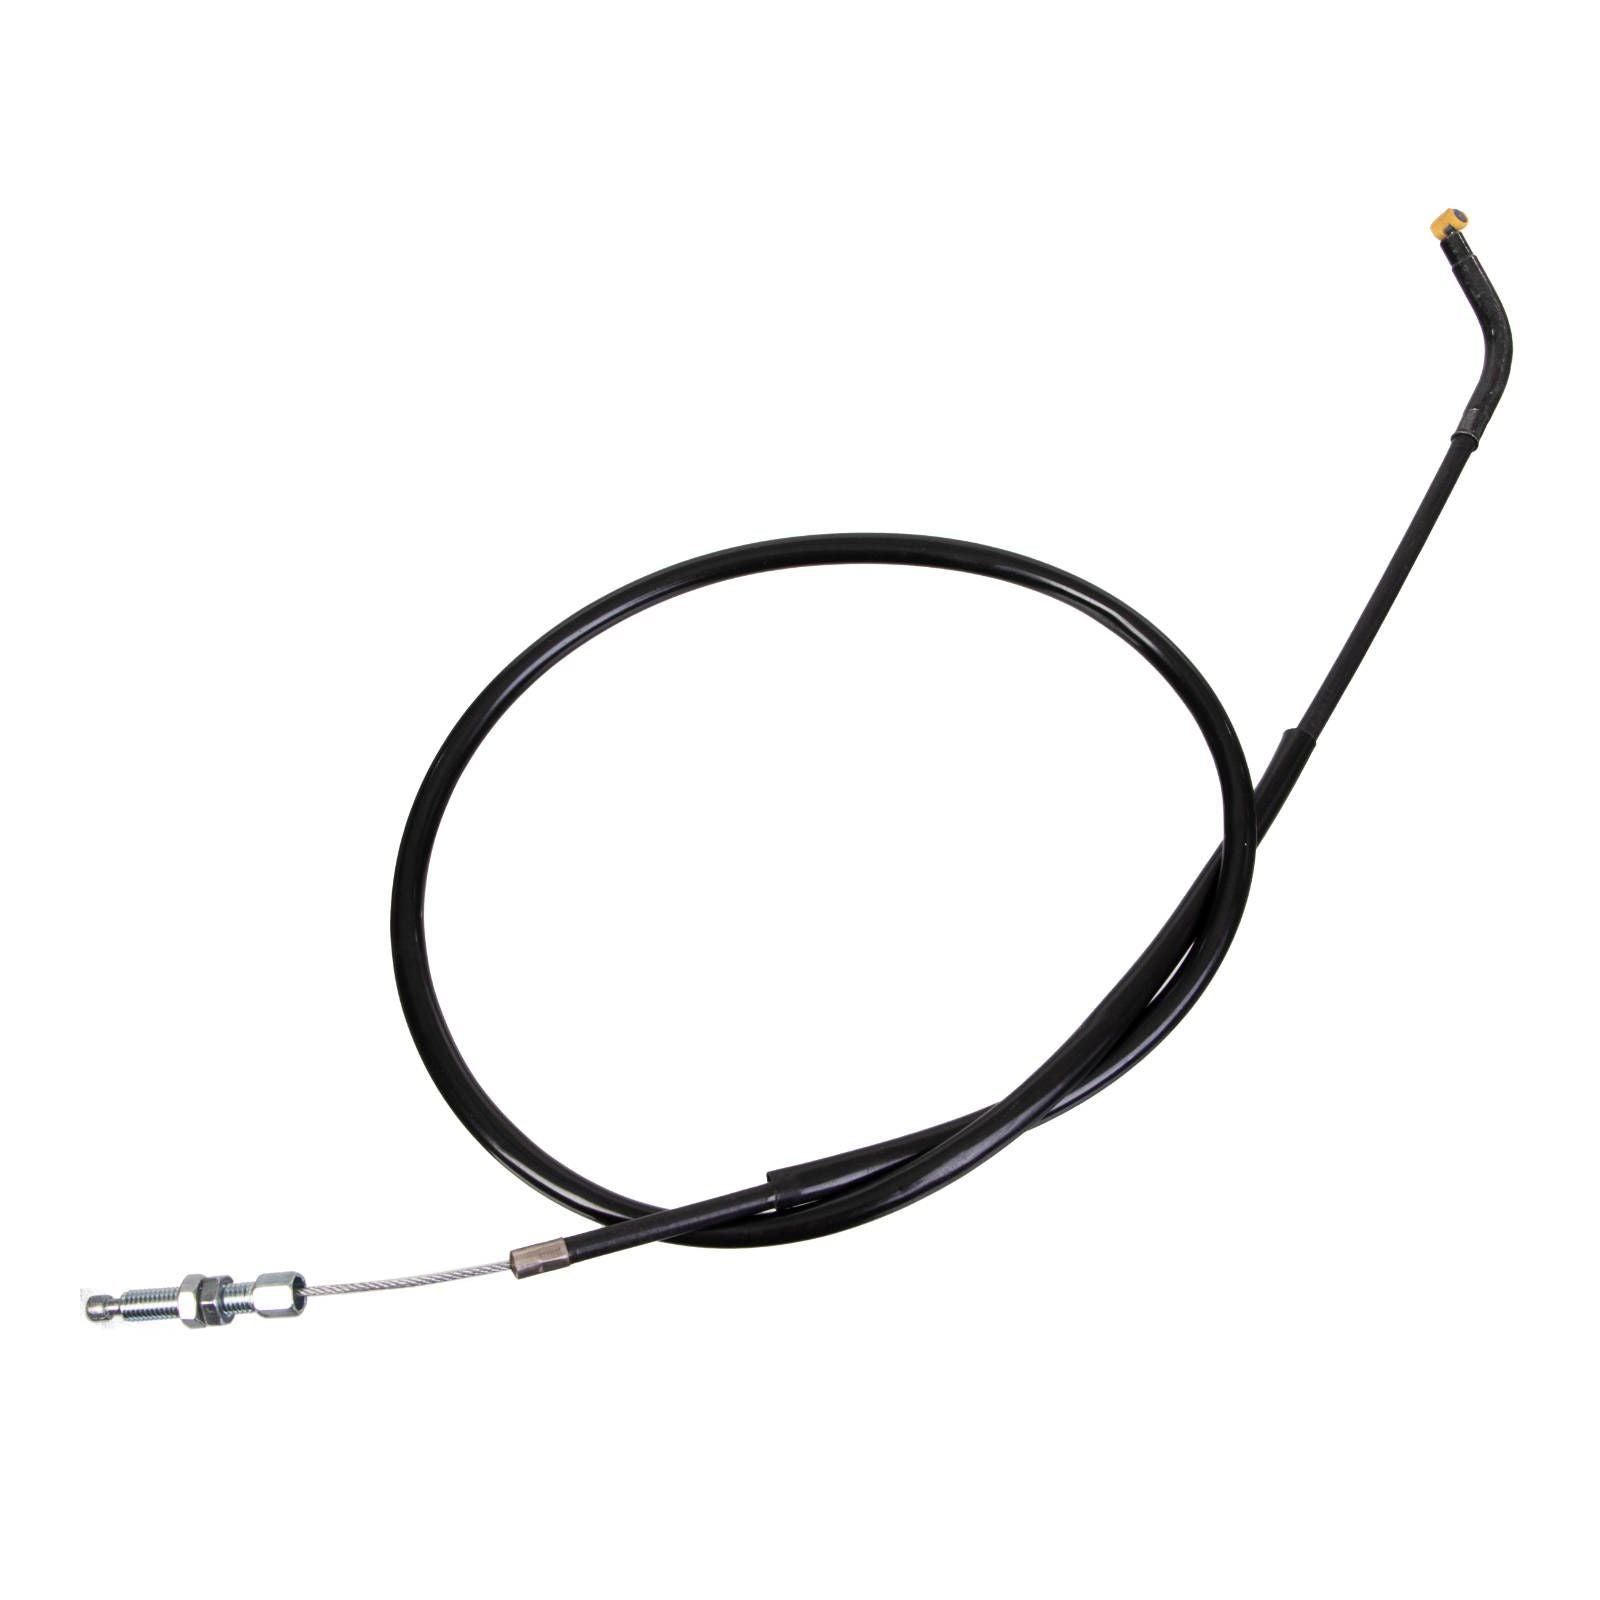 New WHITES Clutch Cable For Suzuki DL650 V-STROM 2004-2011 #WPCC05009